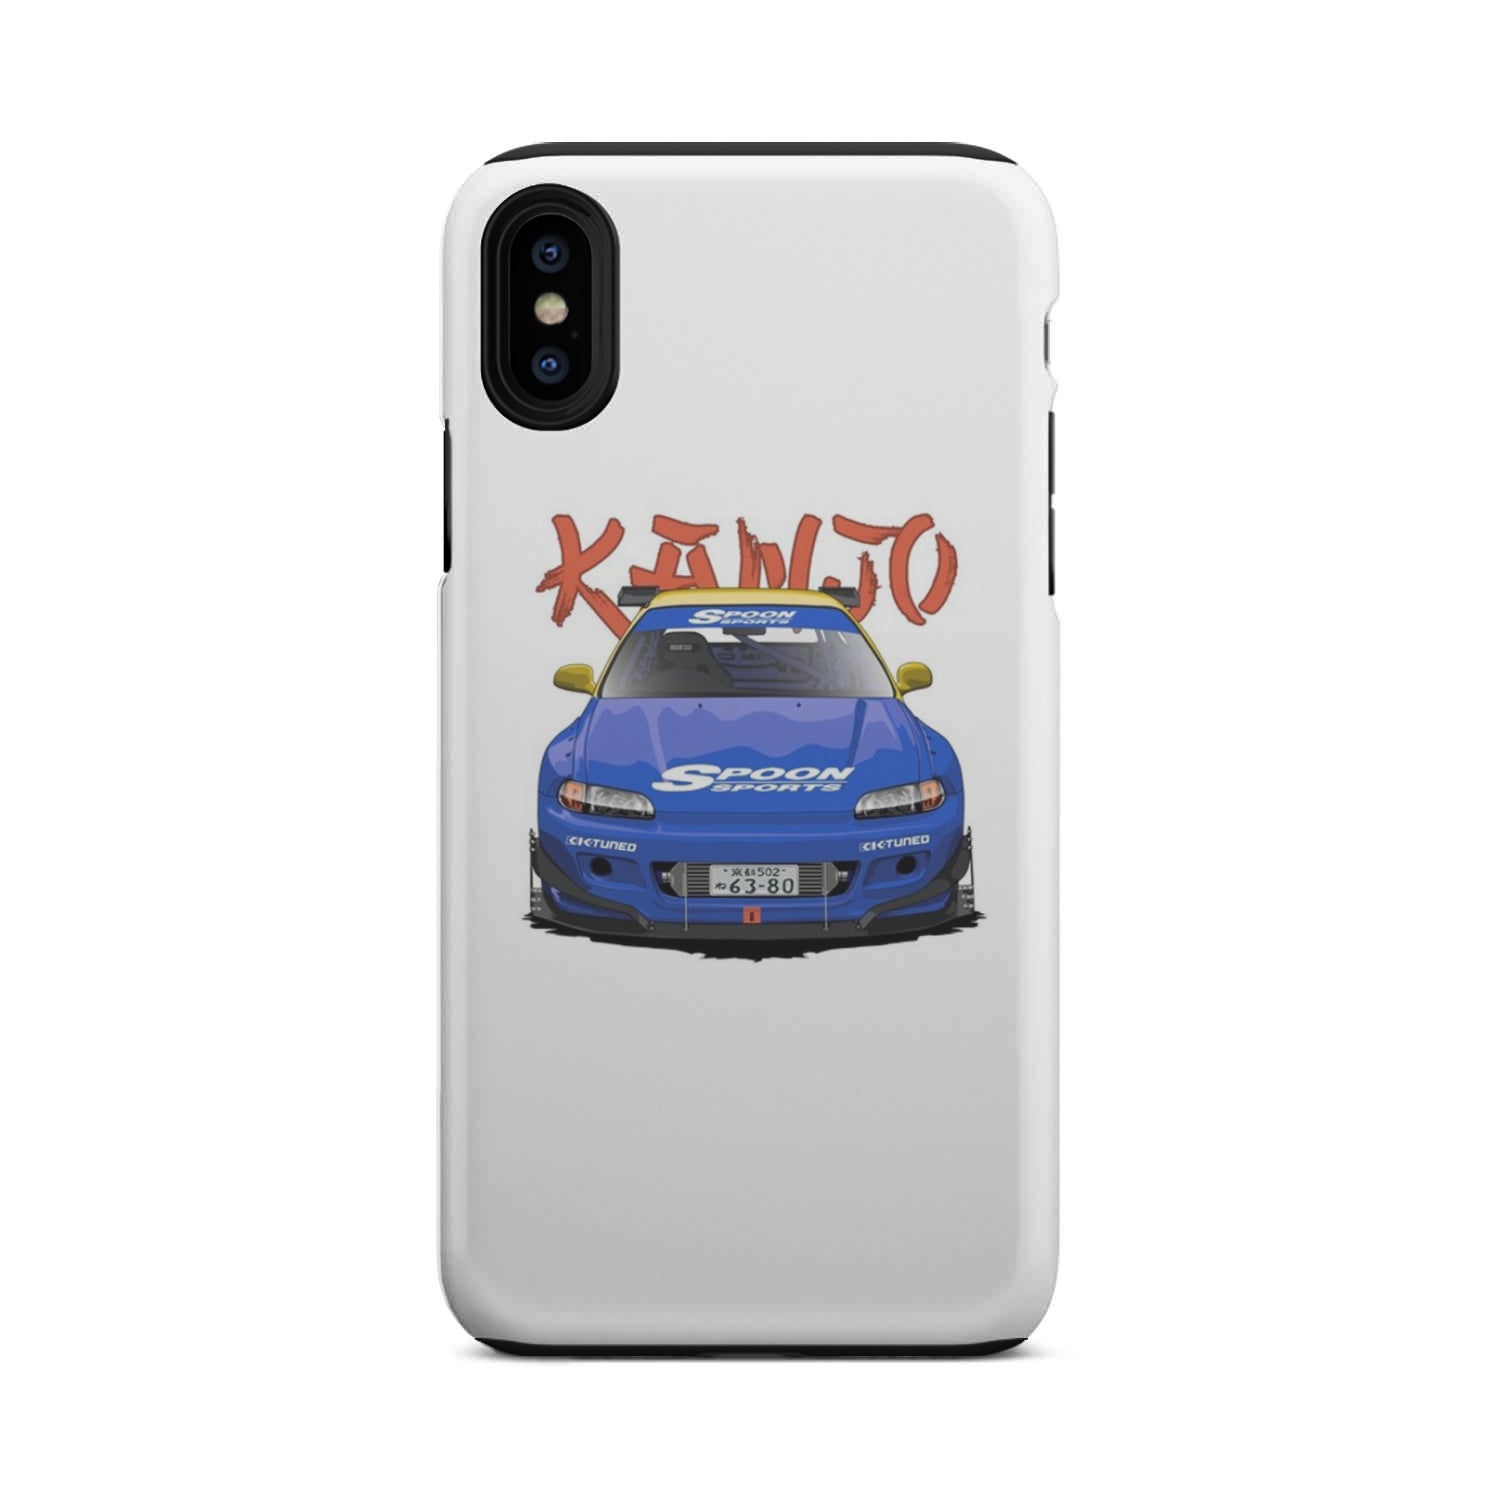 Honda EG Kanjo Phone Case